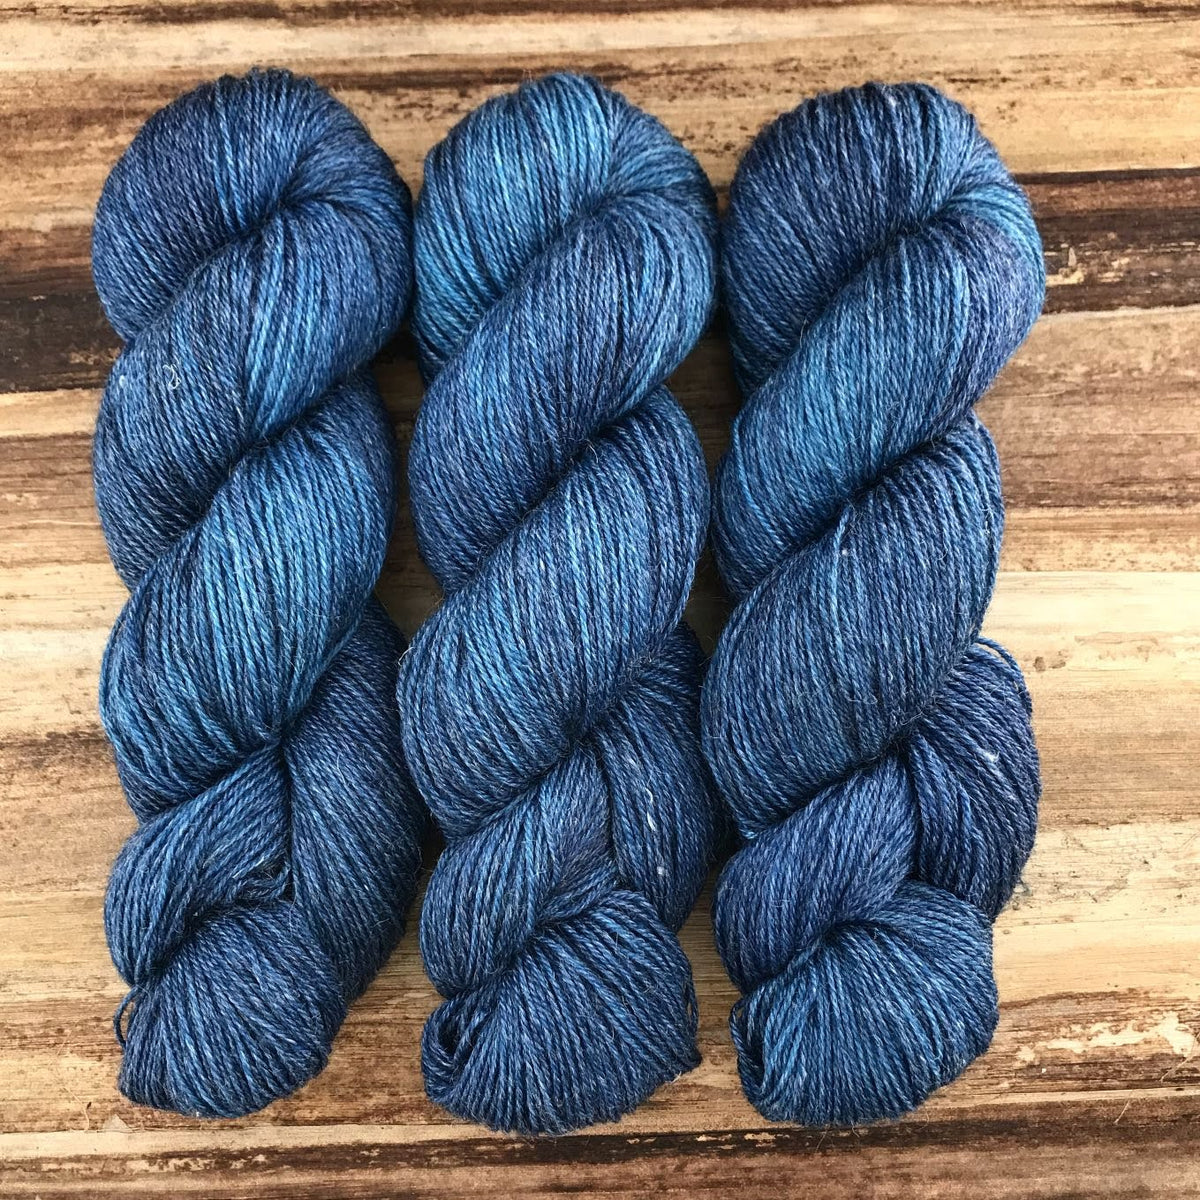 Lapis Lazuli - Nettle Soft DK - Dyed Stock